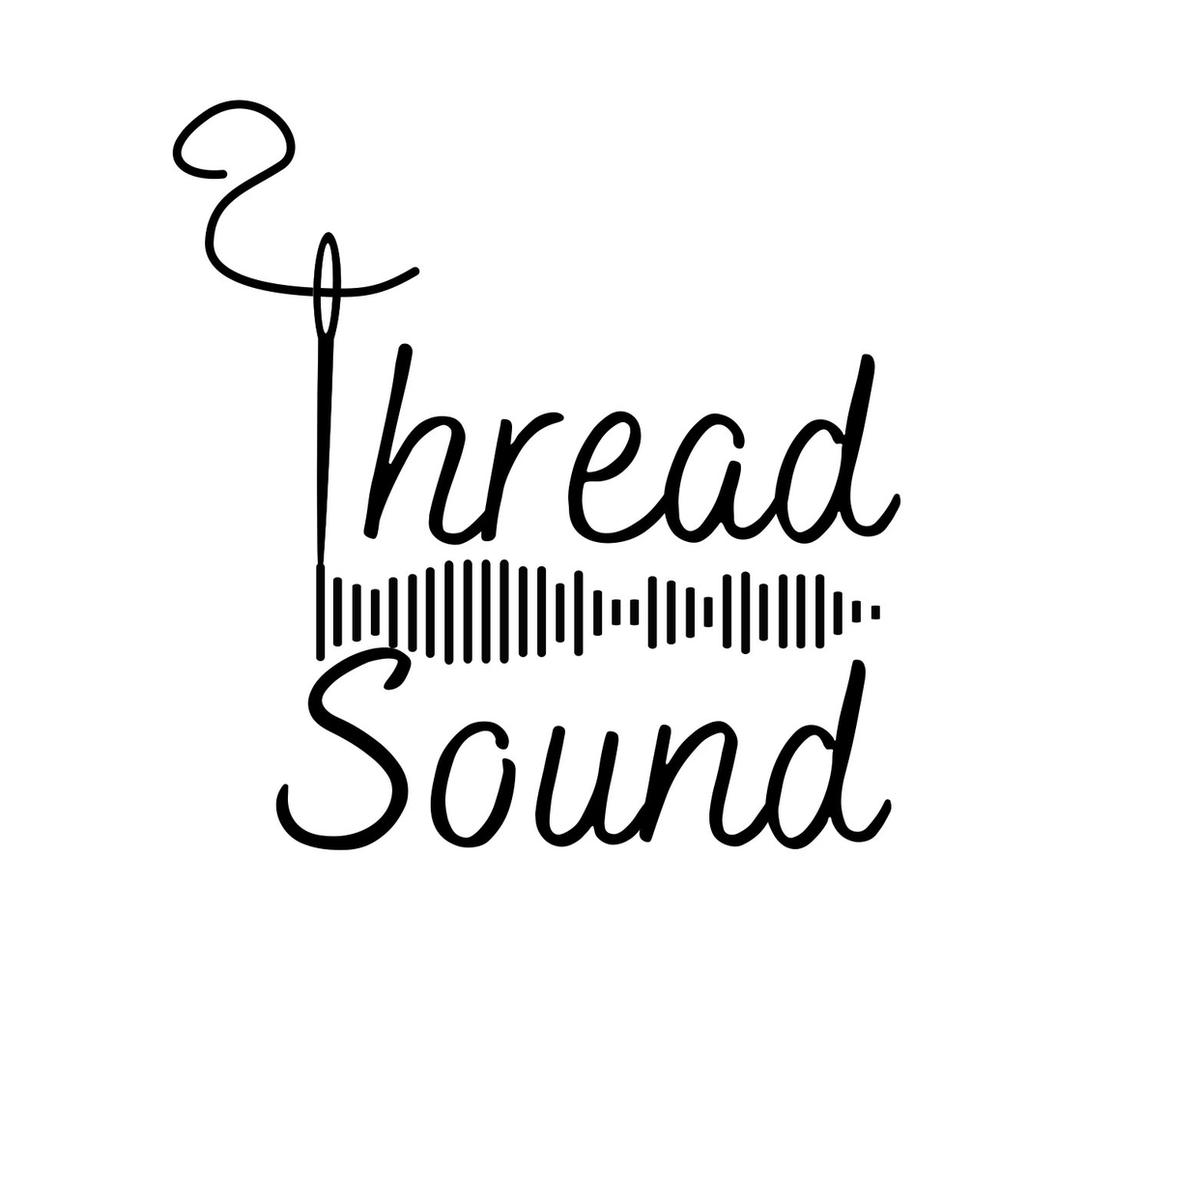 Thread Sound's images